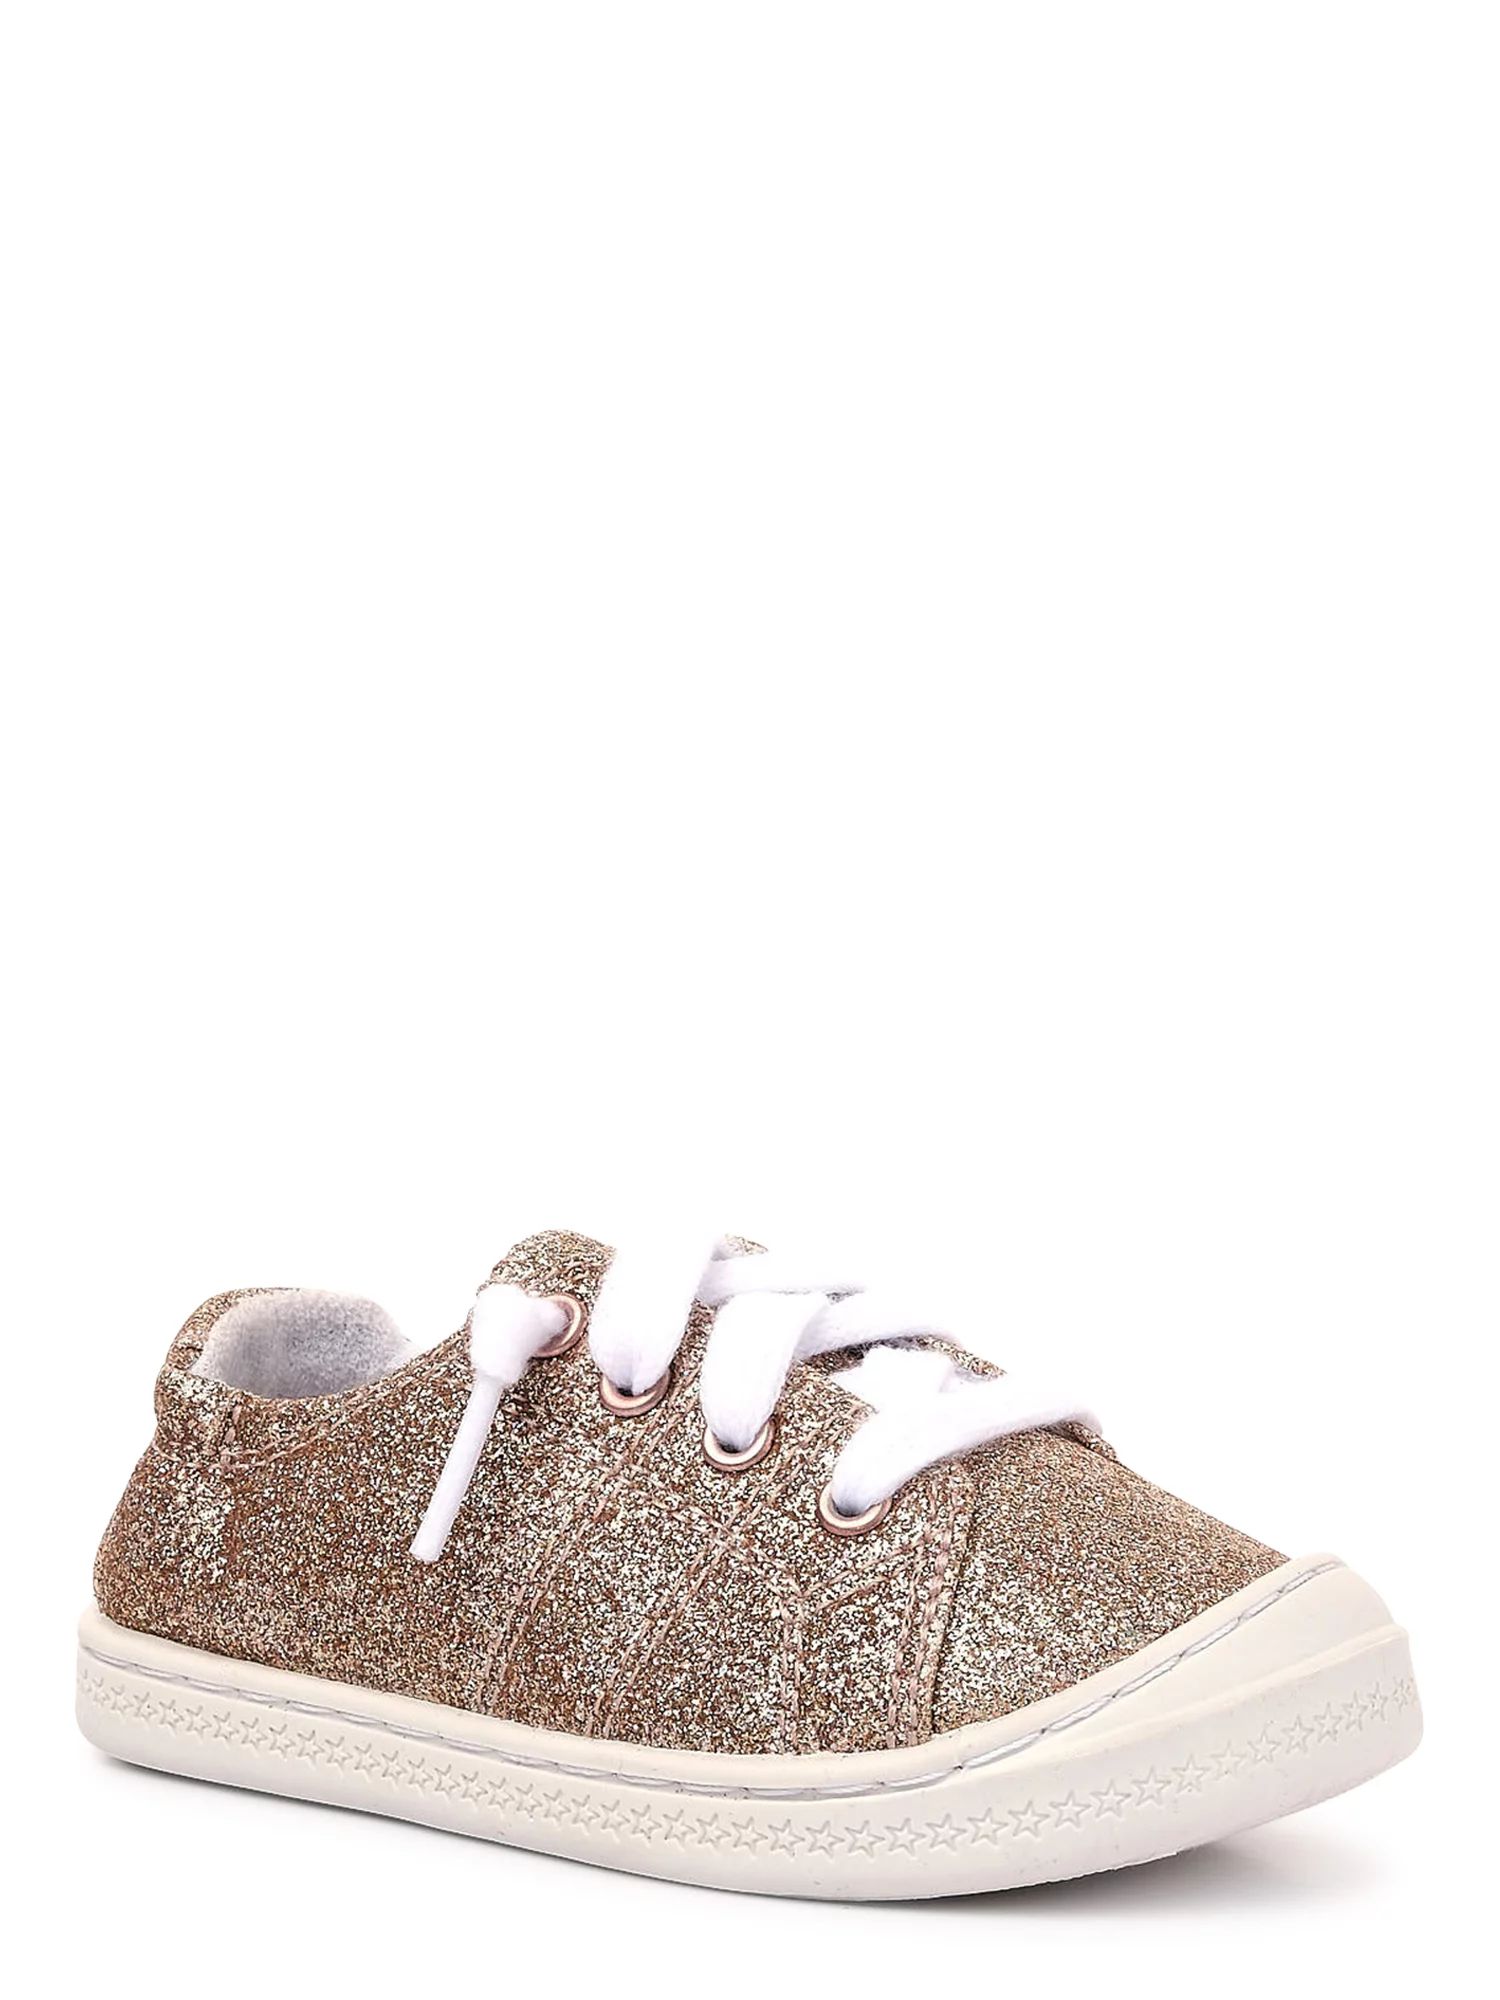 Wonder Nation Toddler Girl Casual Bump Toe Shoes, Sizes 7-12 | Walmart (US)